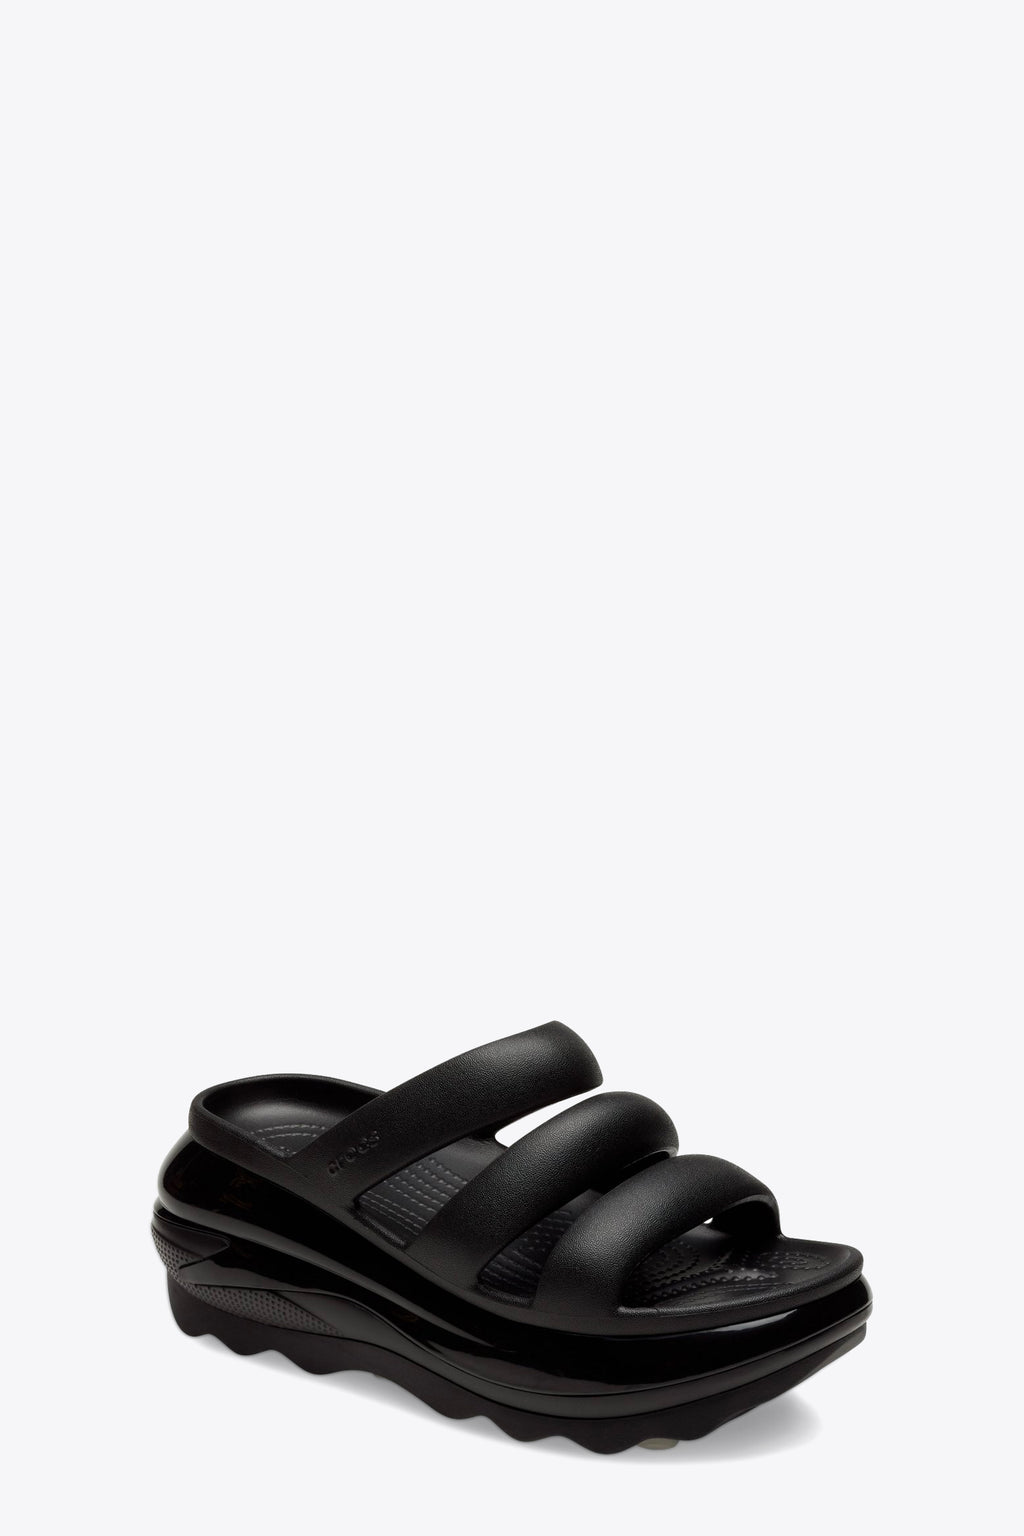 alt-image__Black-rubber-sandal-with-wedge---Mega-Crush-Triple-Strap